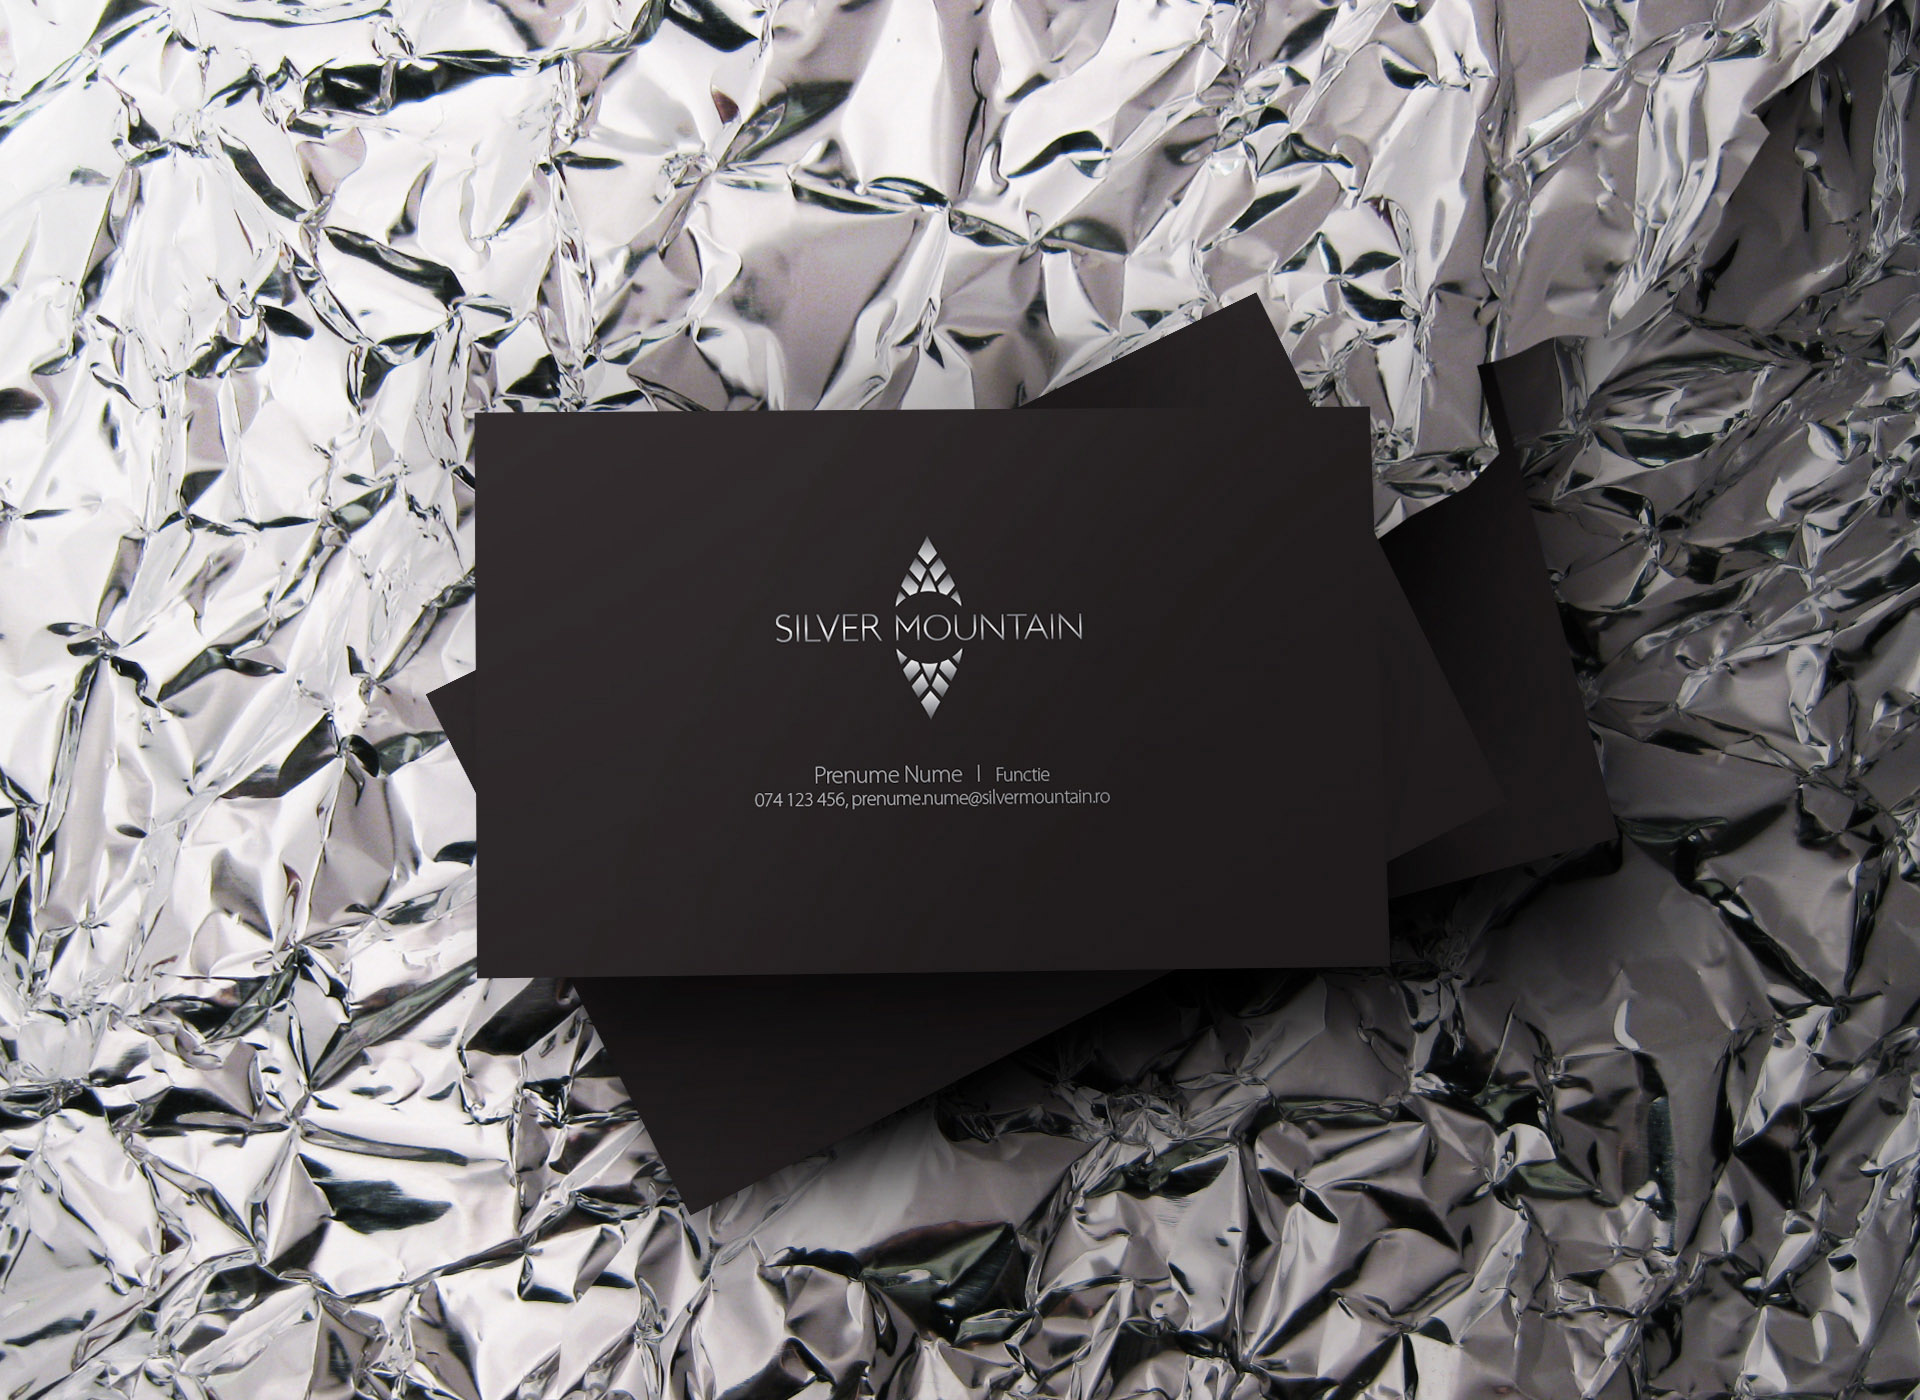 Silver Mountain portfolio inoveo business card